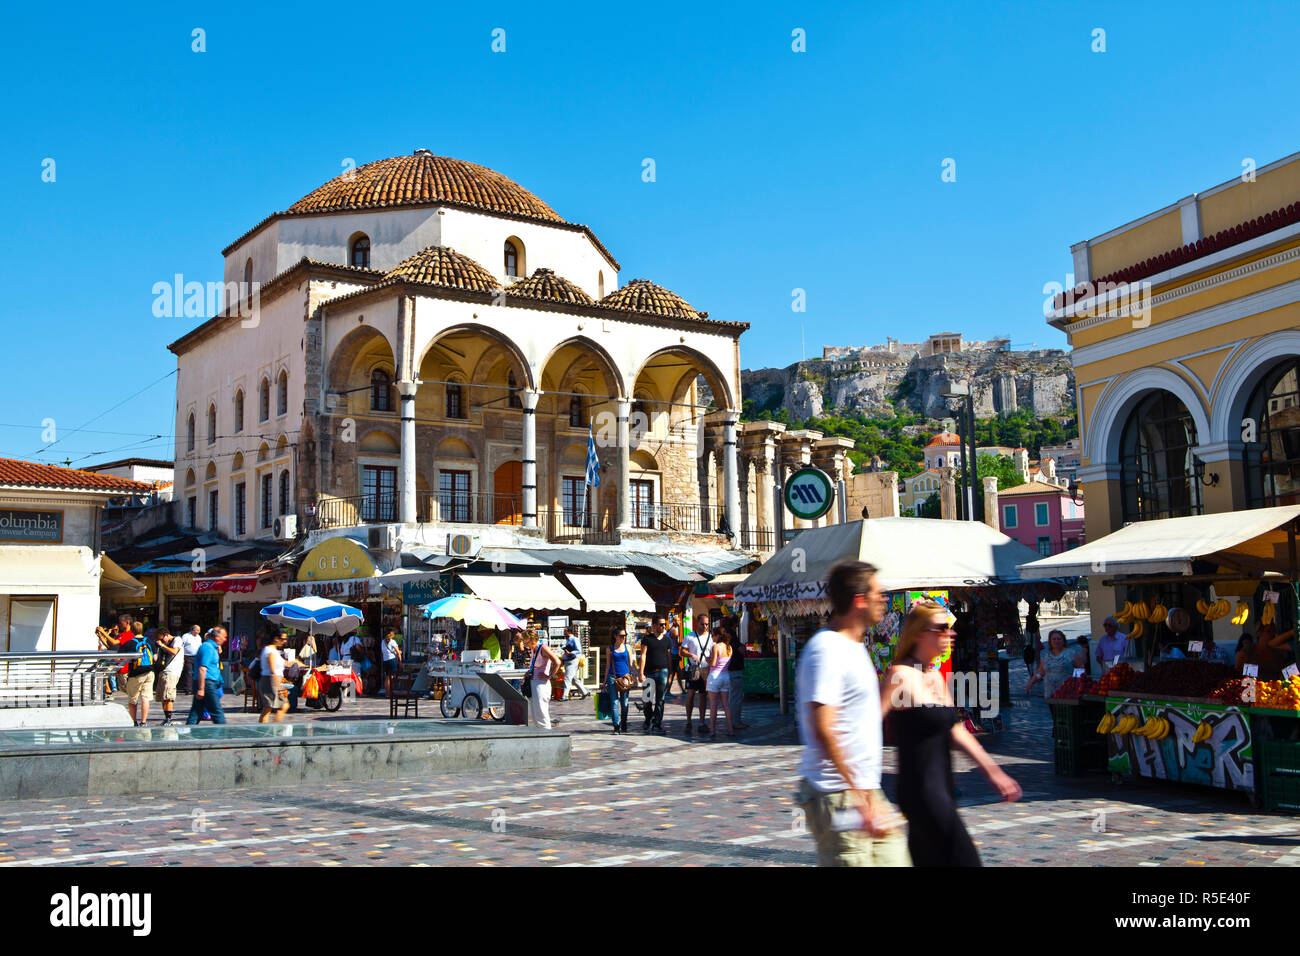 Athens greece monastiraki shop hi-res stock photography and images - Alamy